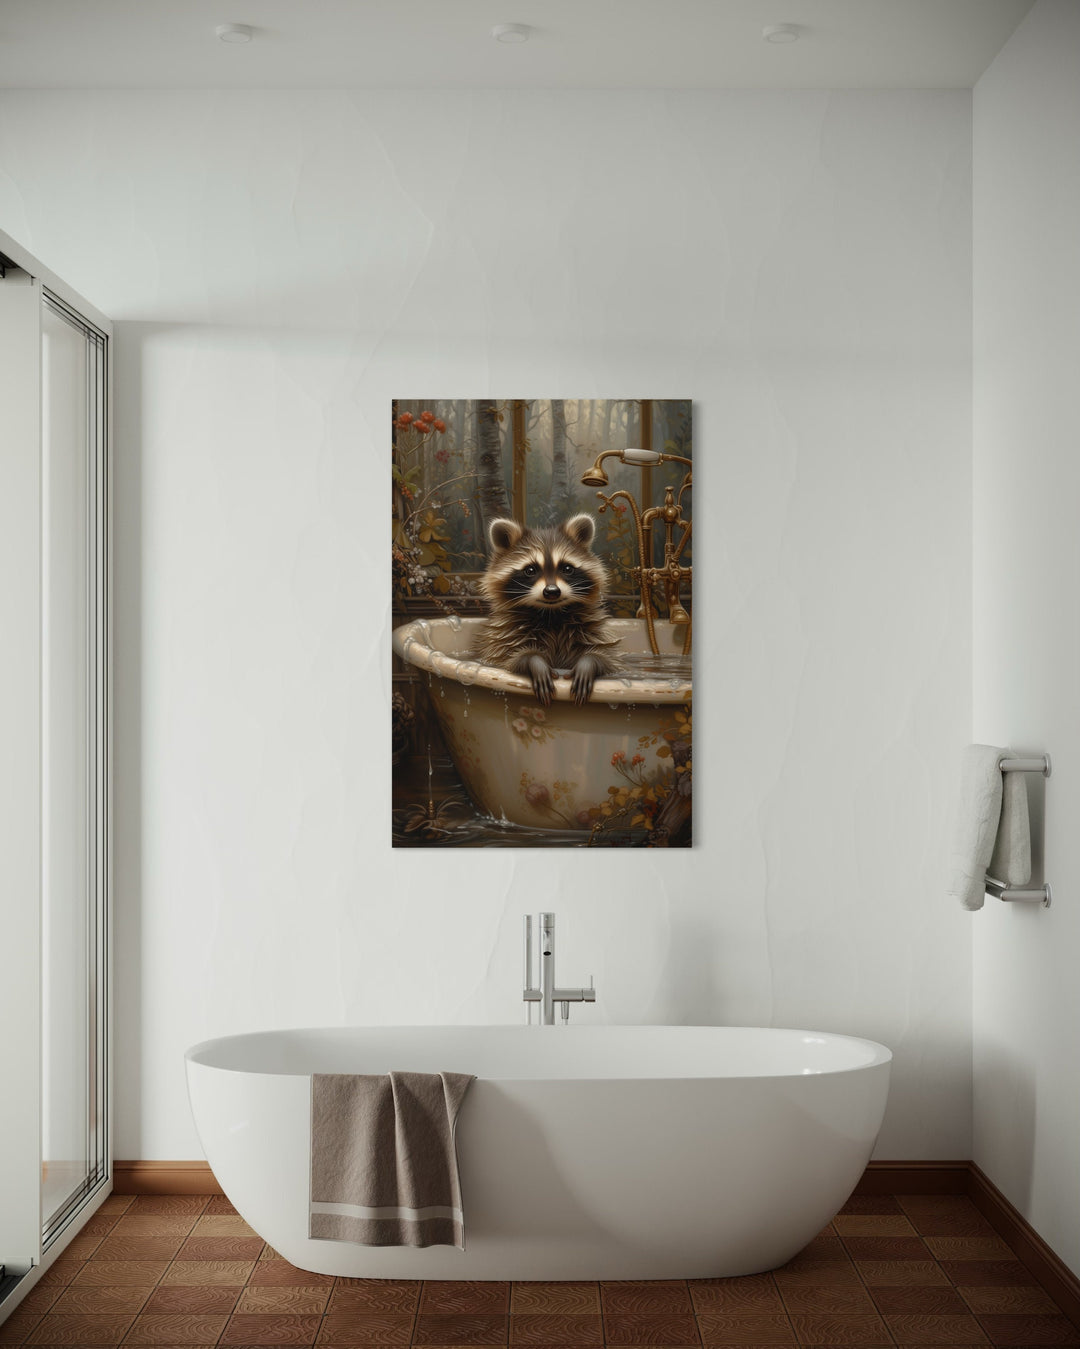 Raccoon In The Bathtub Framed Canvas Wall Art above bathtub